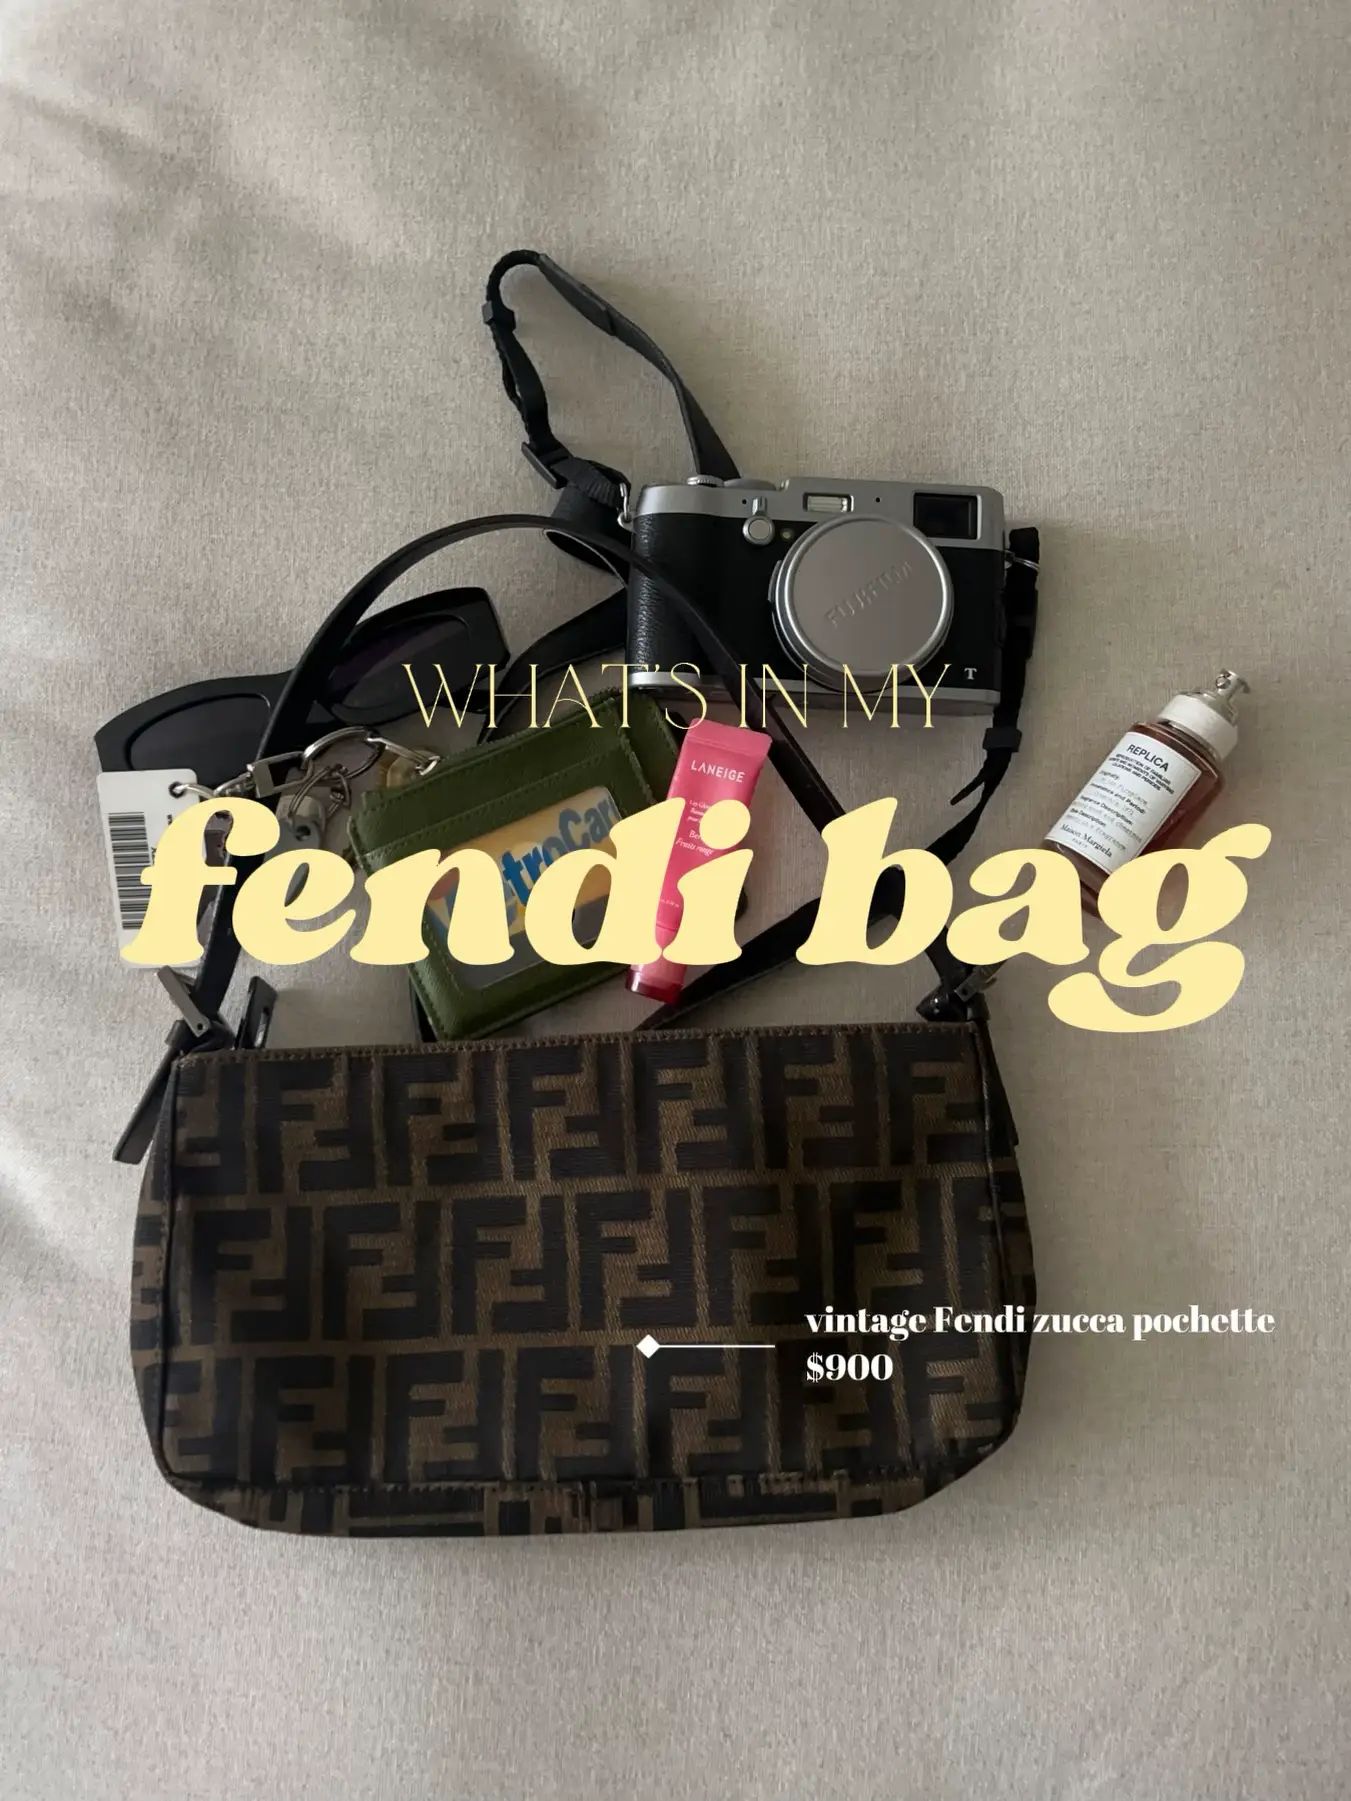 Finally scored a Vintage Fendi Baguette 🌸🤗 : r/handbags